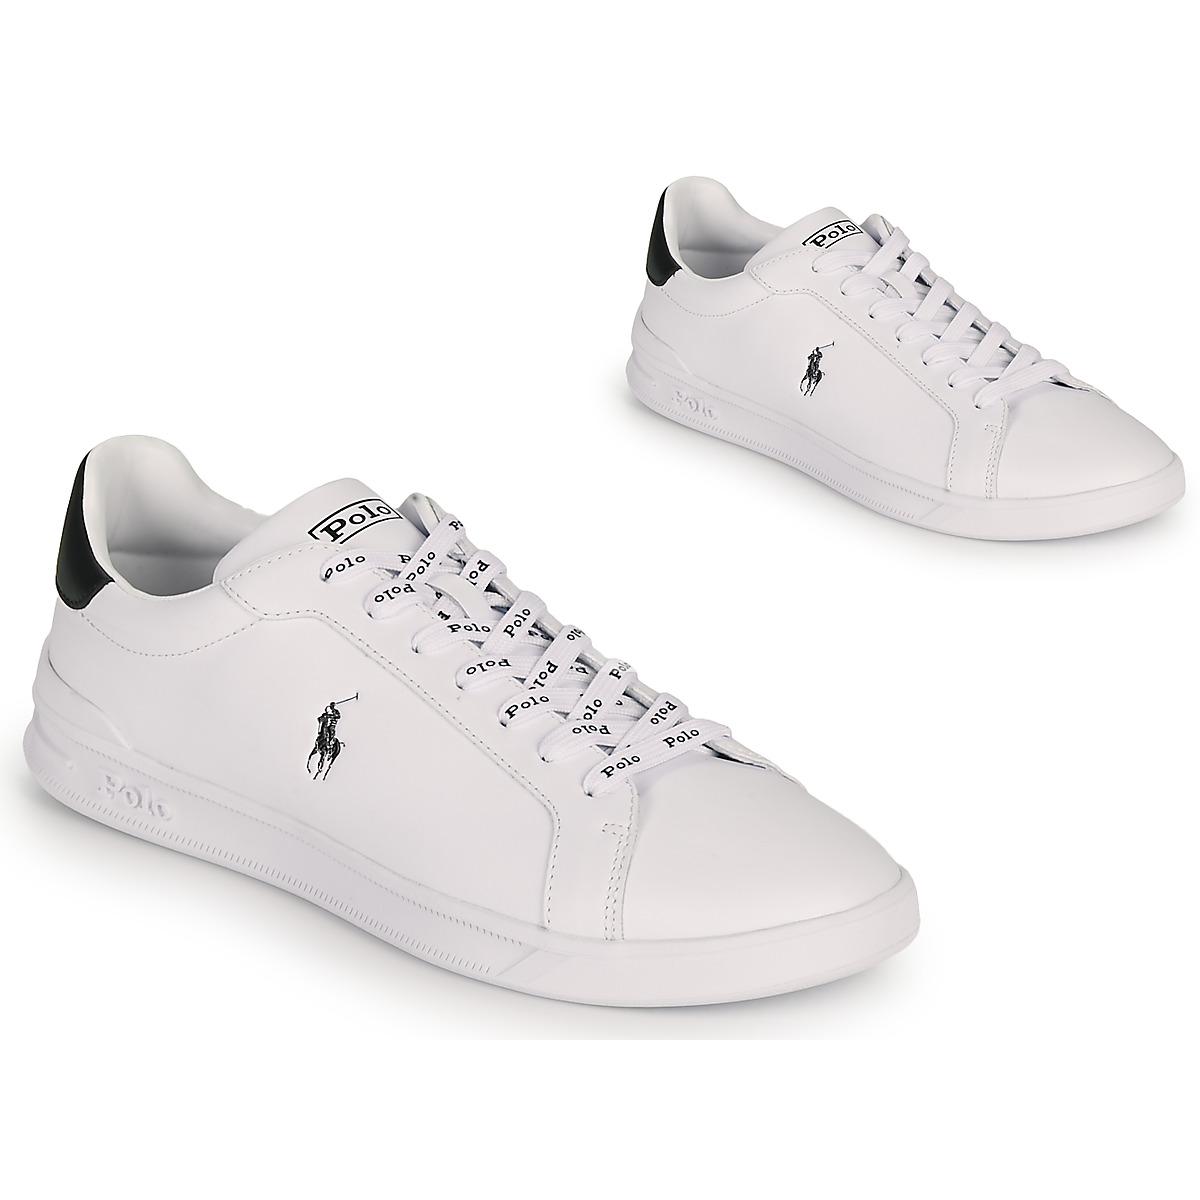 Polo Ralph Lauren Hrt Ct Ii-sneakers-athletic Shoe White